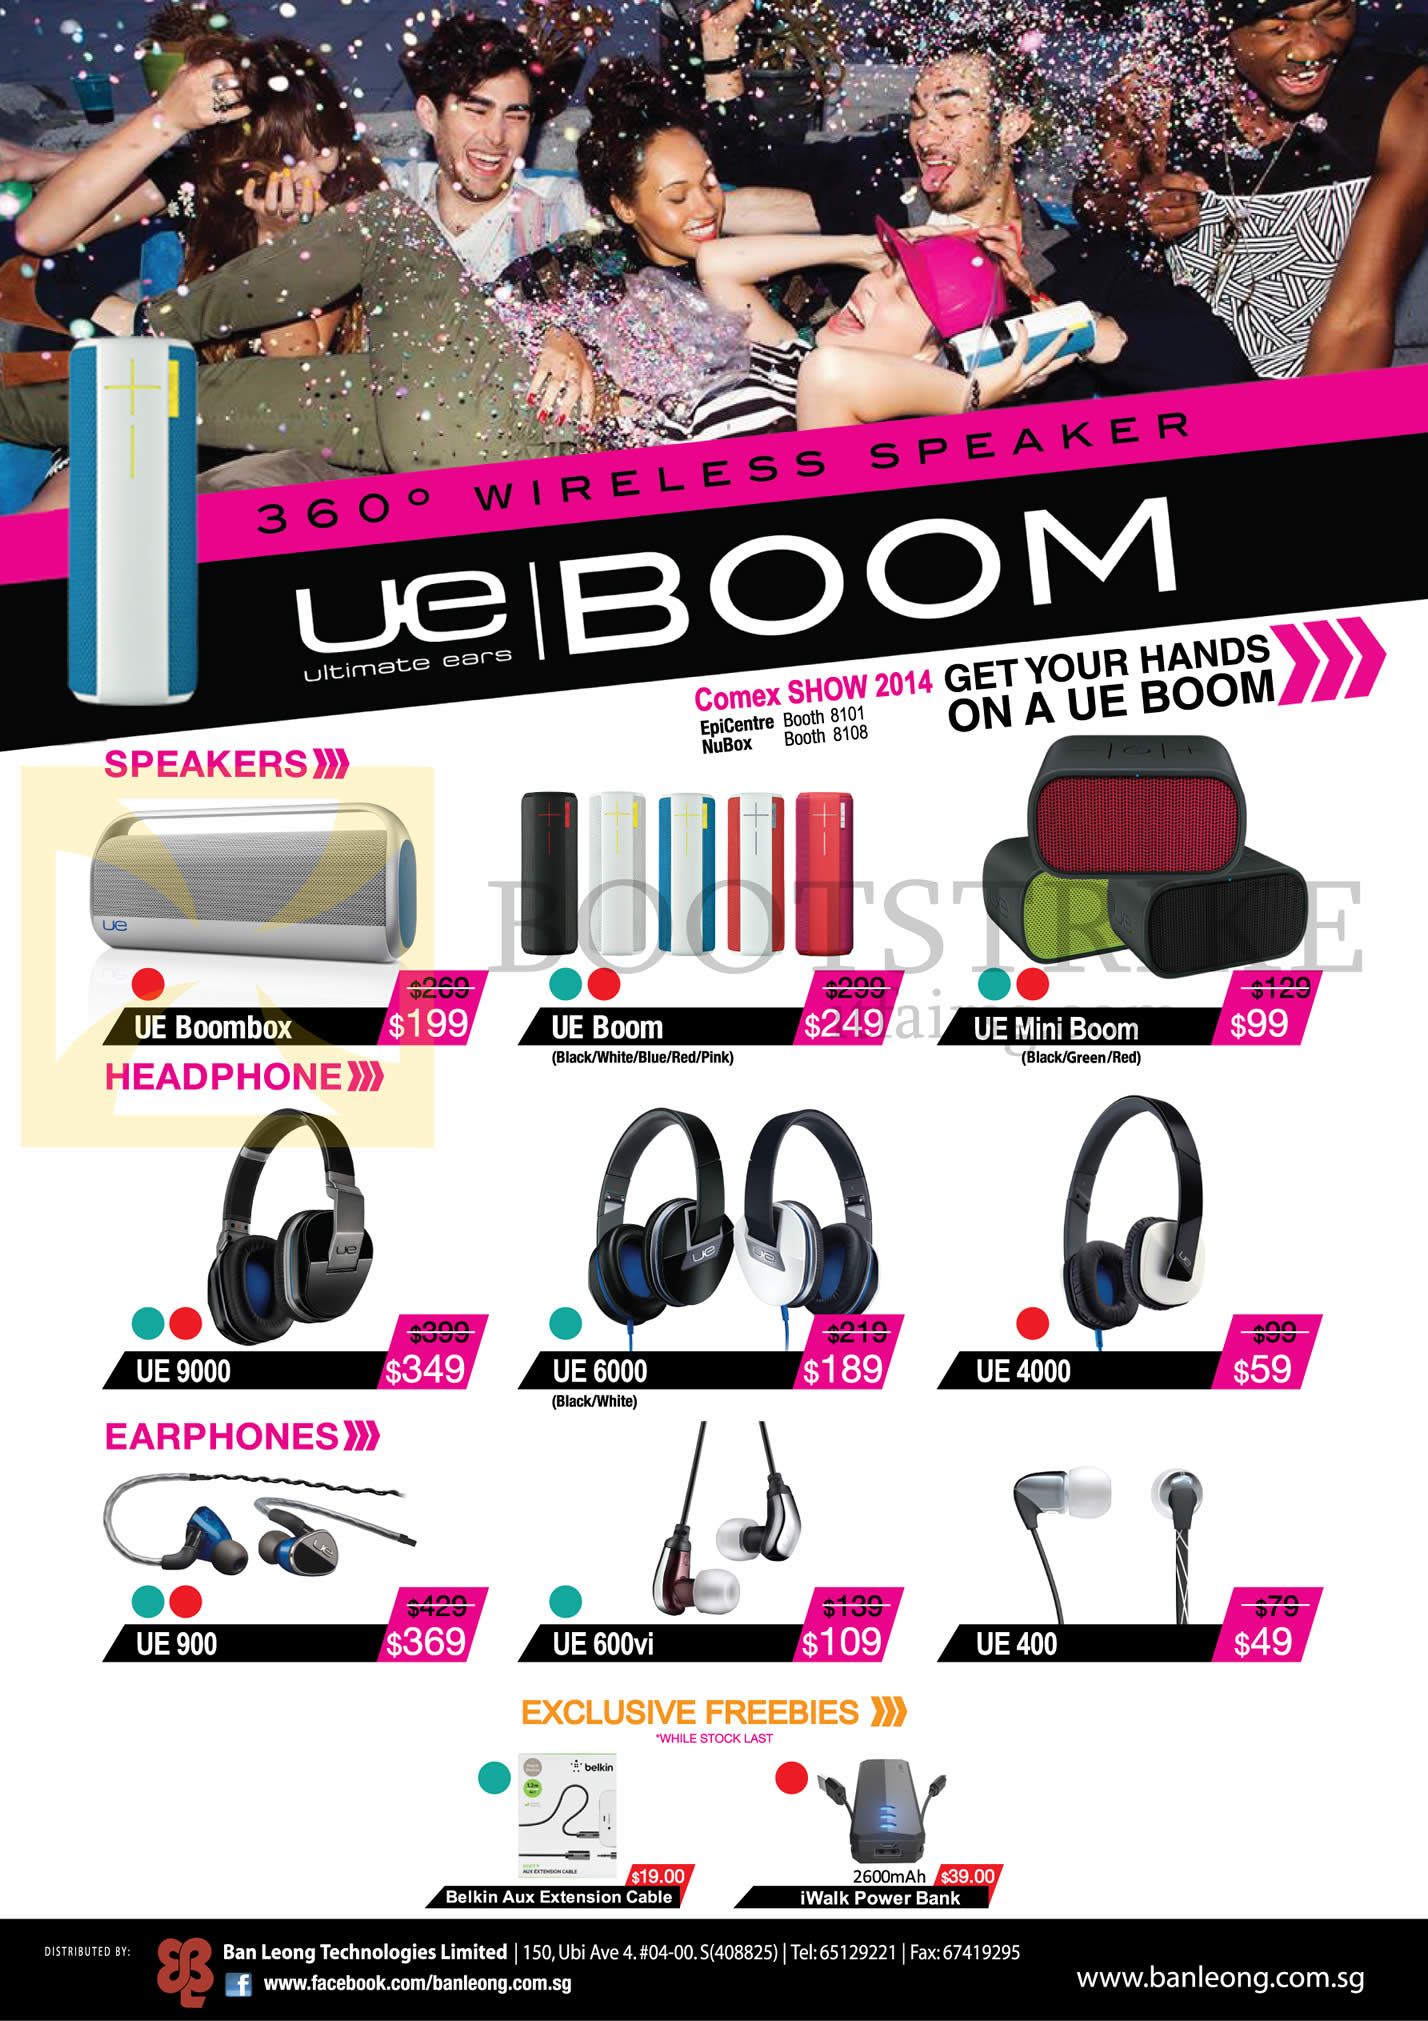 COMEX 2014 price list image brochure of Logitech Ultimate Ears UE Speakers, Earphones, Headphones, UE Boombox, UE Boom, UE Mini Boom, UE9000, UE6000, UE4000, UE900, UE600vi, UE400